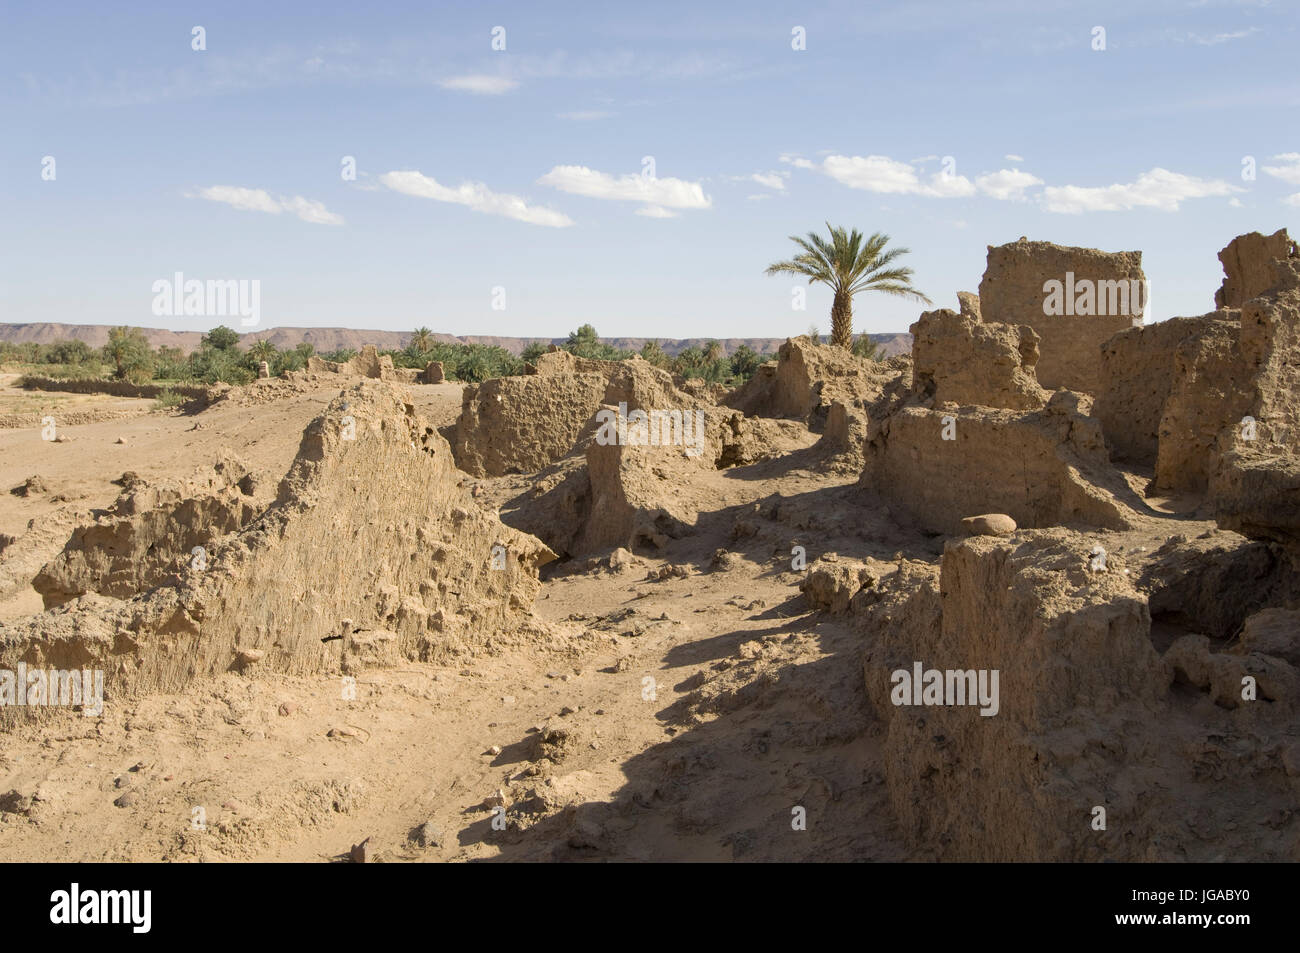 Jarma (Germa), Garamantes archaeological site, Fezzan, Libya. Stock Photo